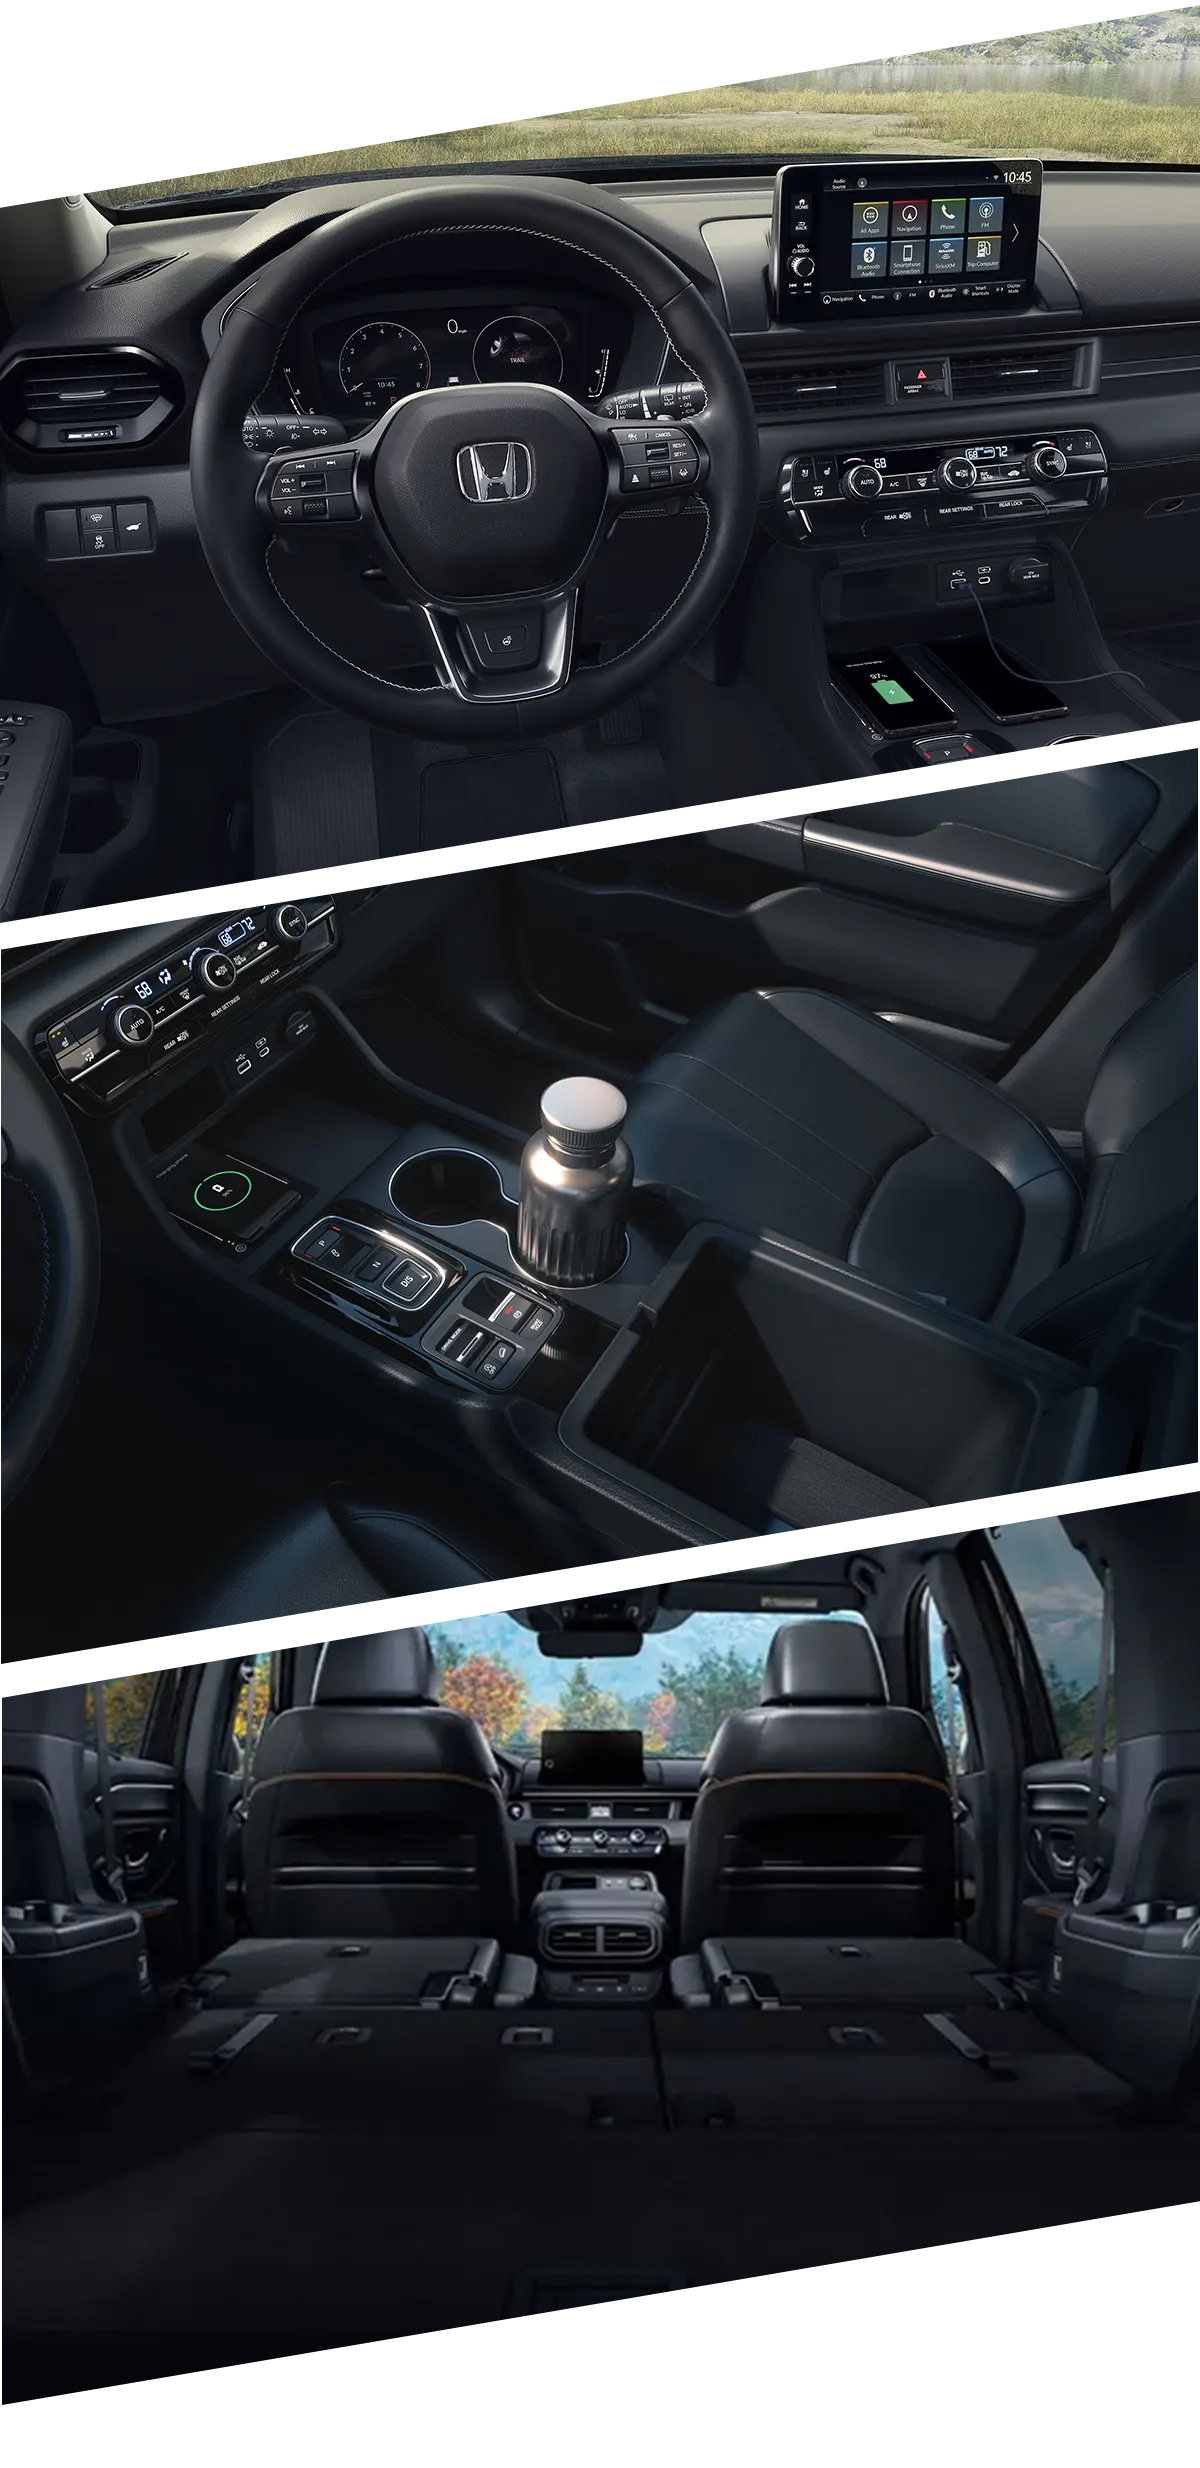 Honda Pilot Interior 